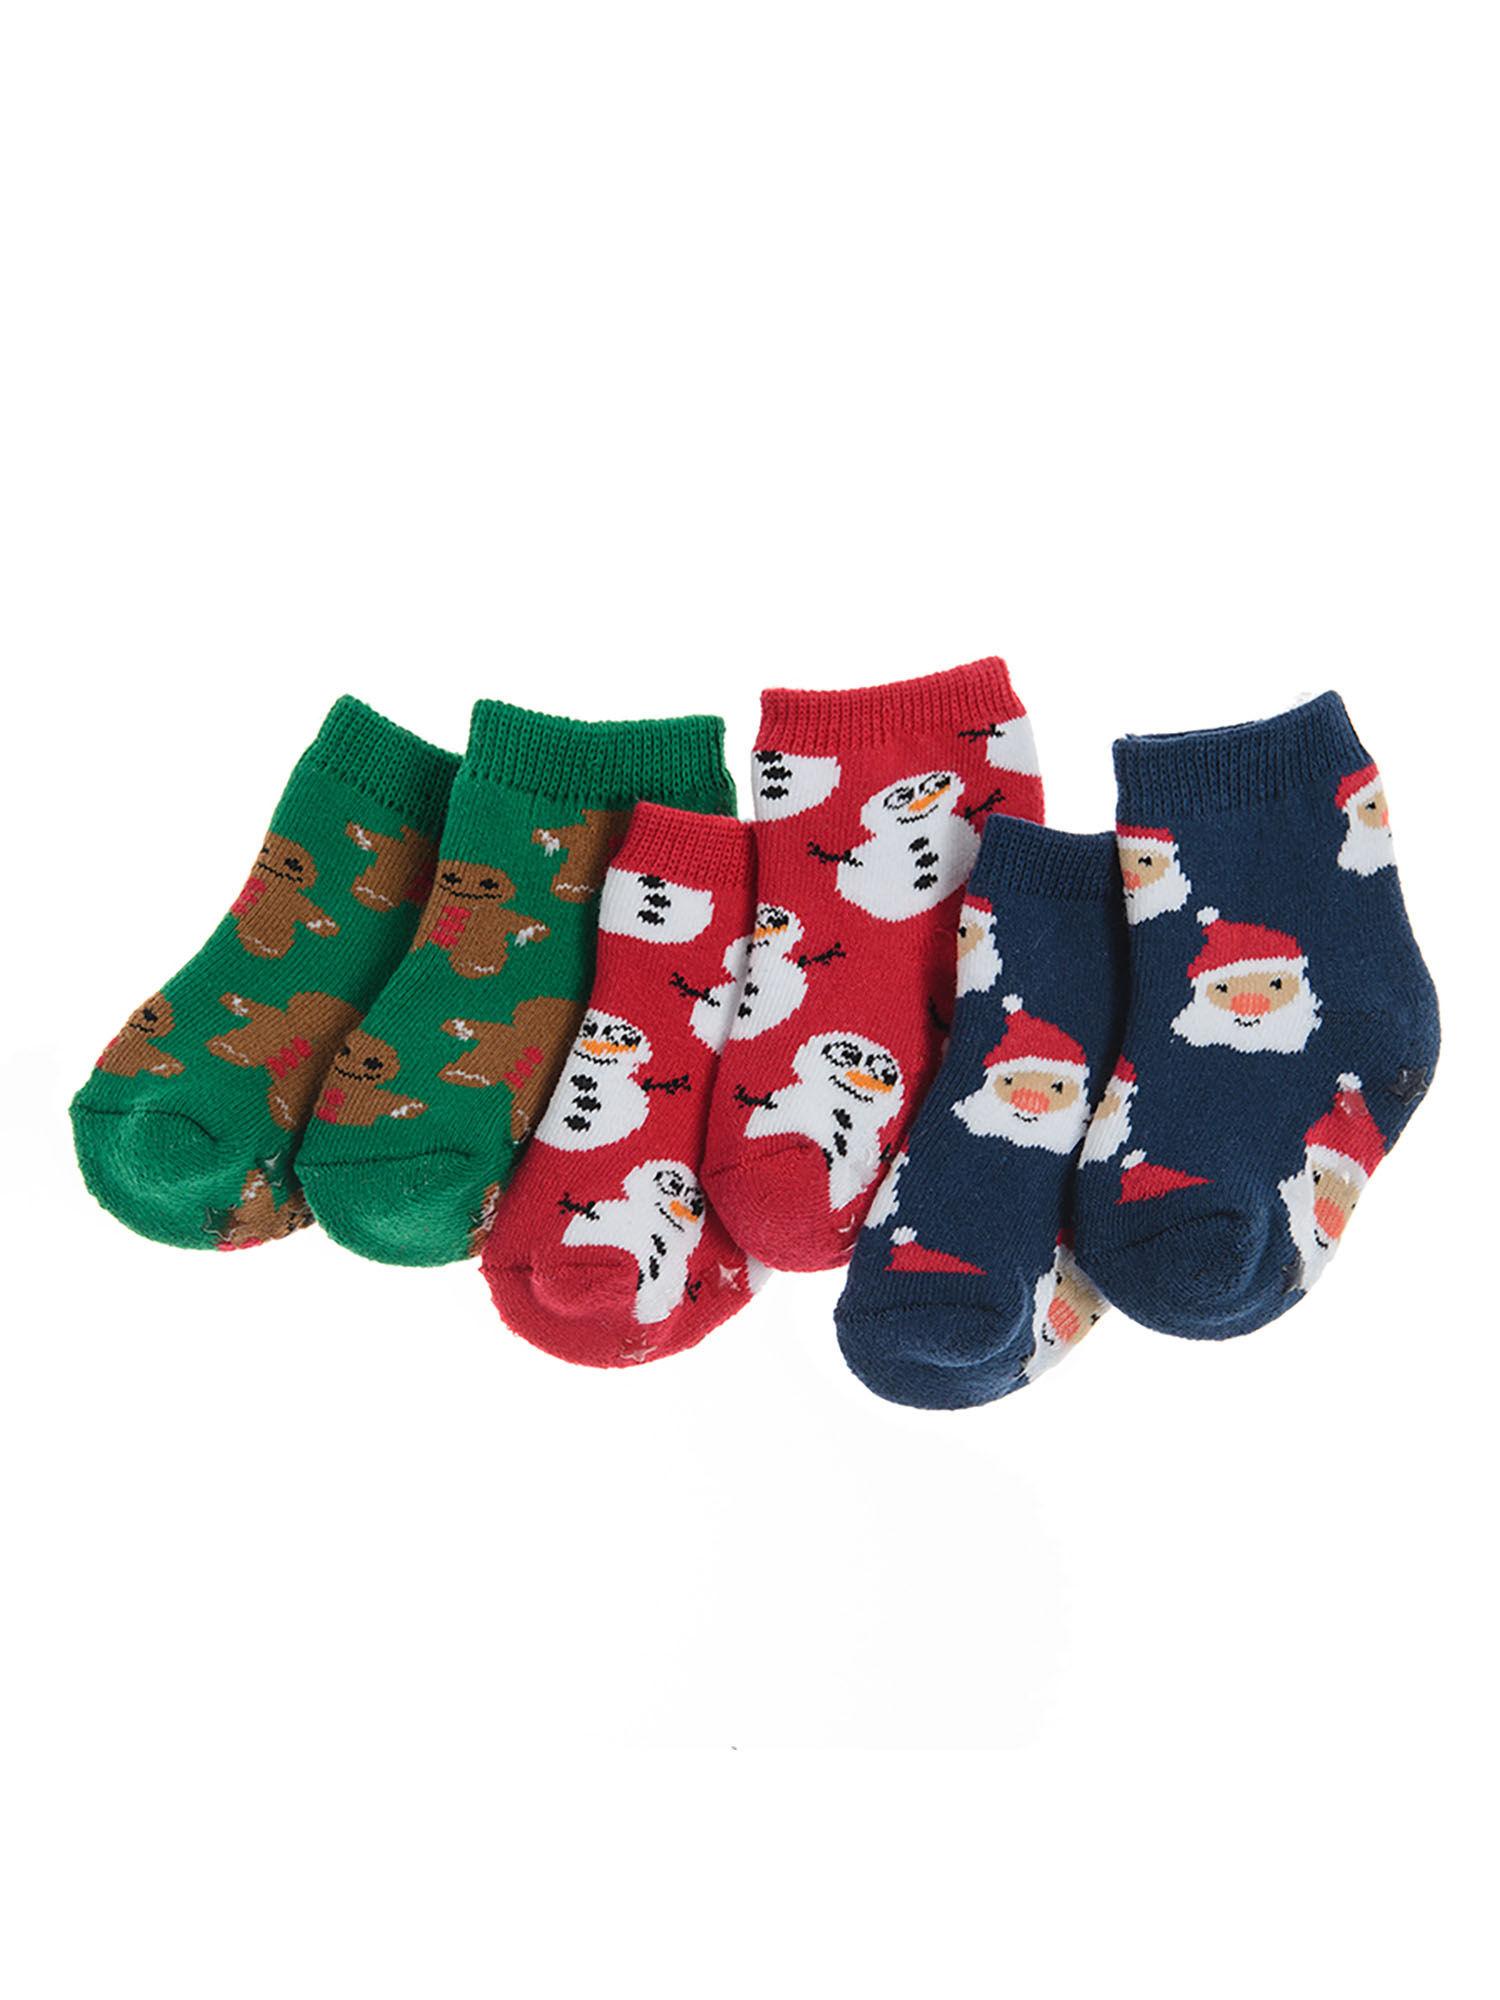 boys multi color printed socks (set of 3)